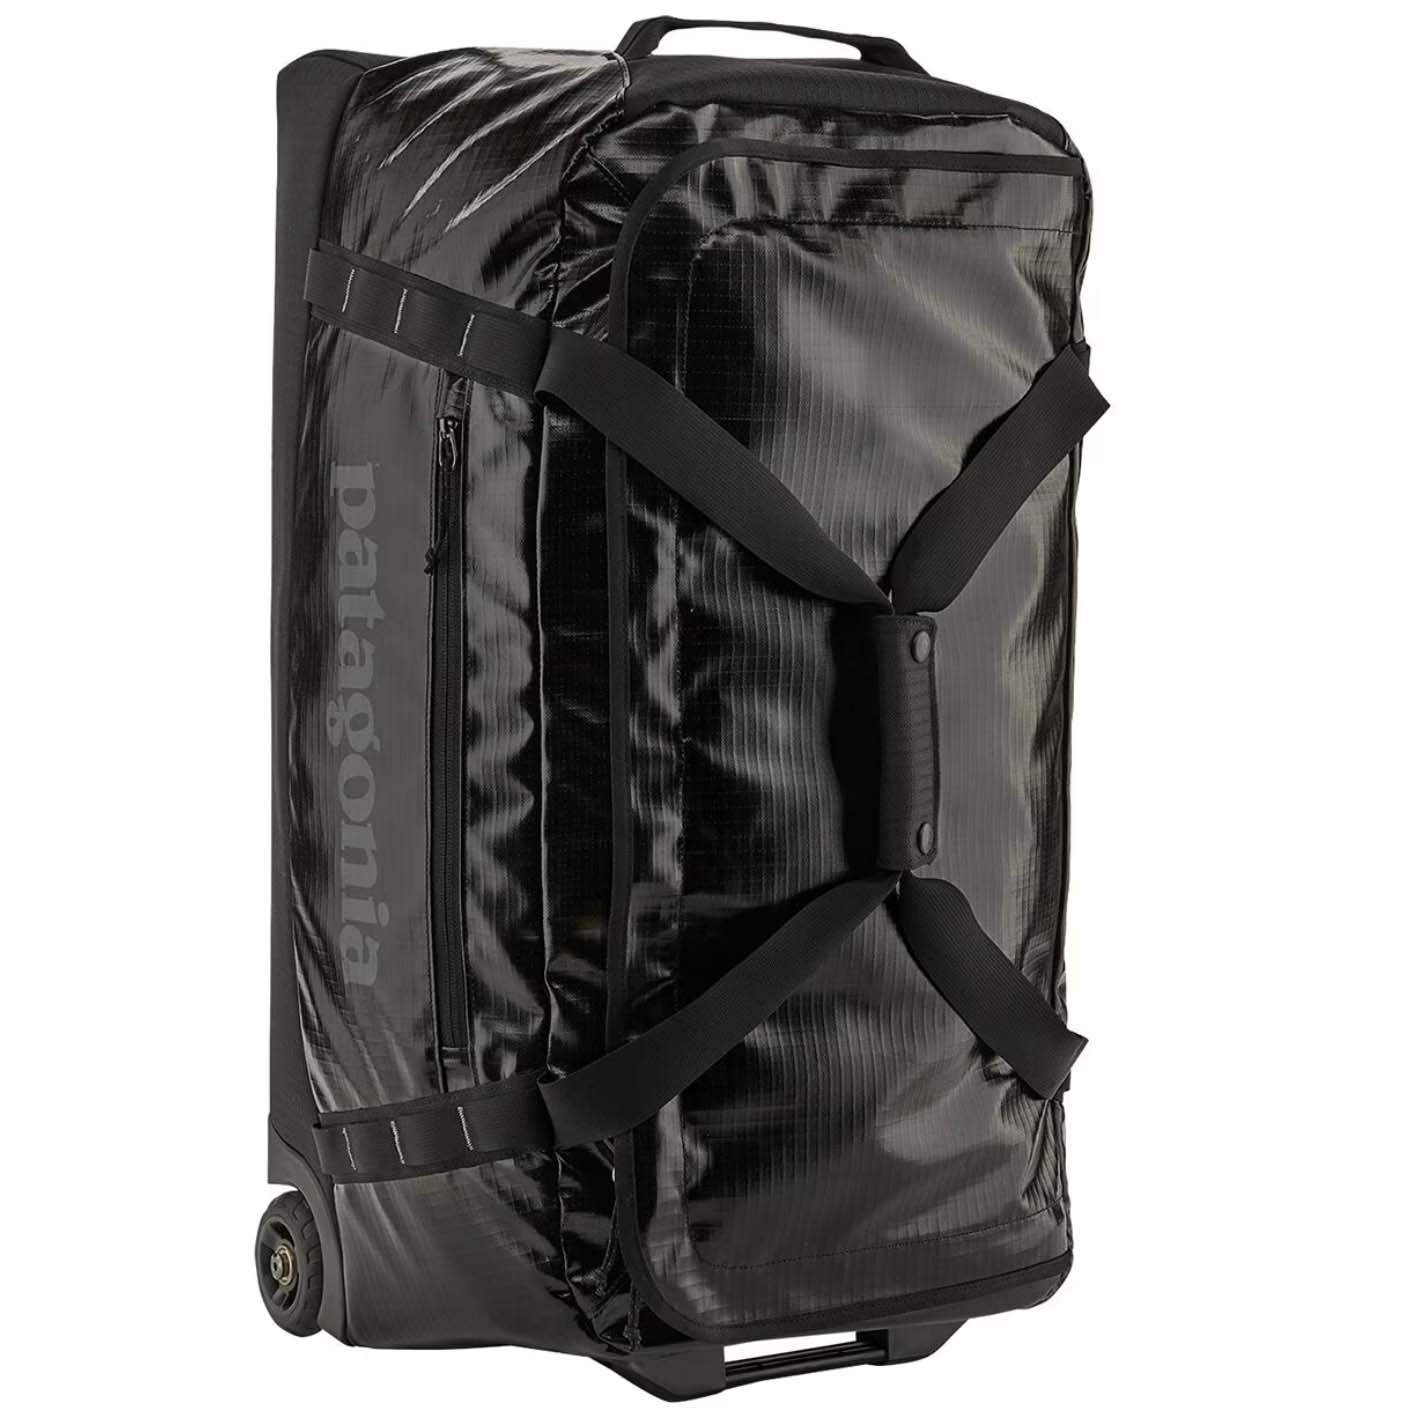 Large black Patagonia duffle bag on wheels